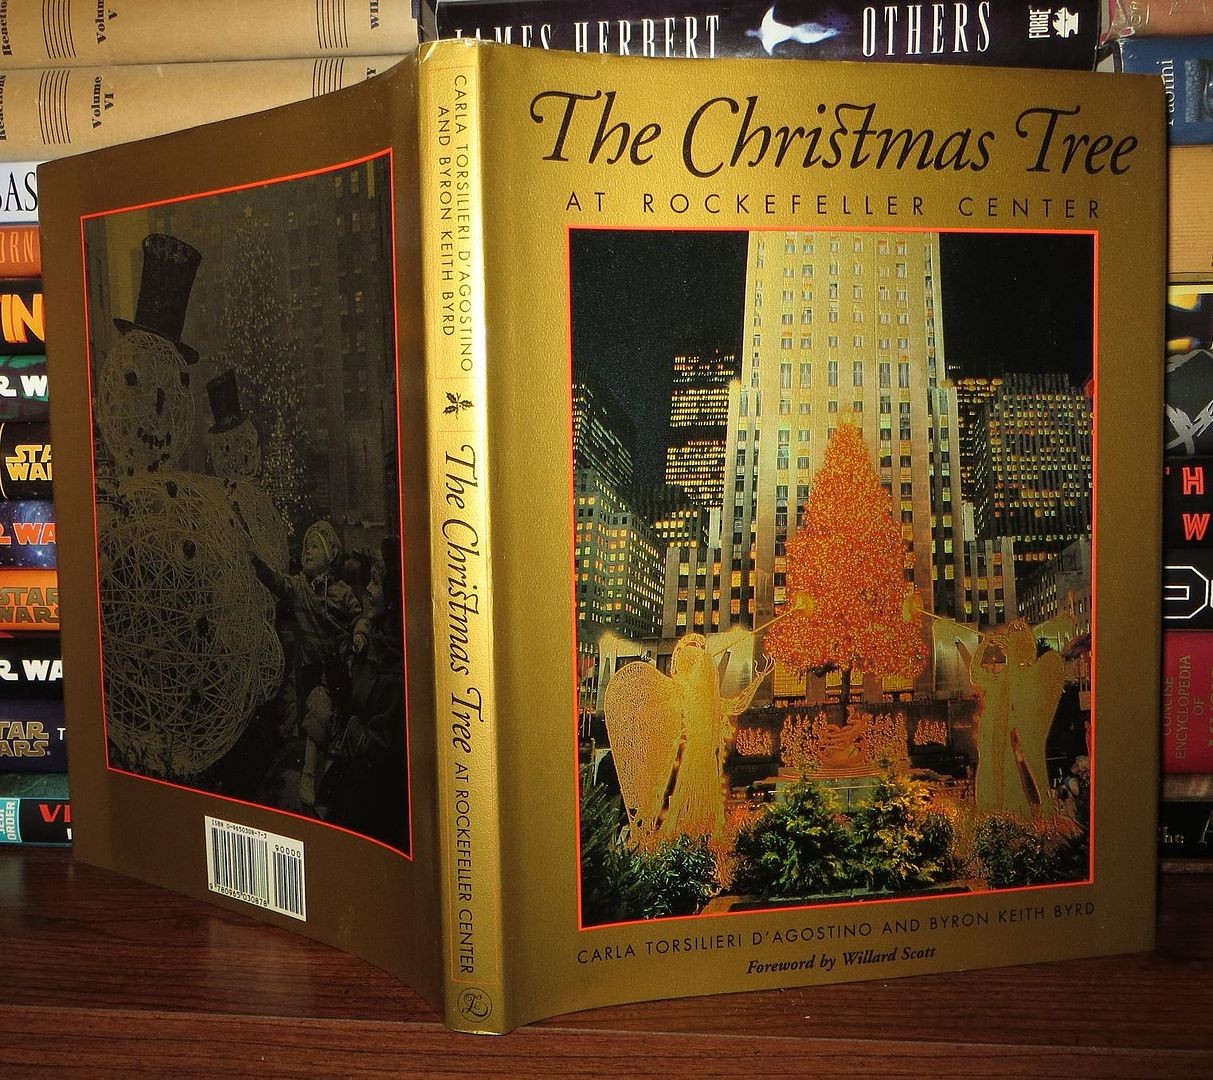 D'AGOSTINO, CARLA TORSILIERI & BYRON KEITH BYRD & WILLARD SCOTT - The Christmas Tree at Rockefeller Center